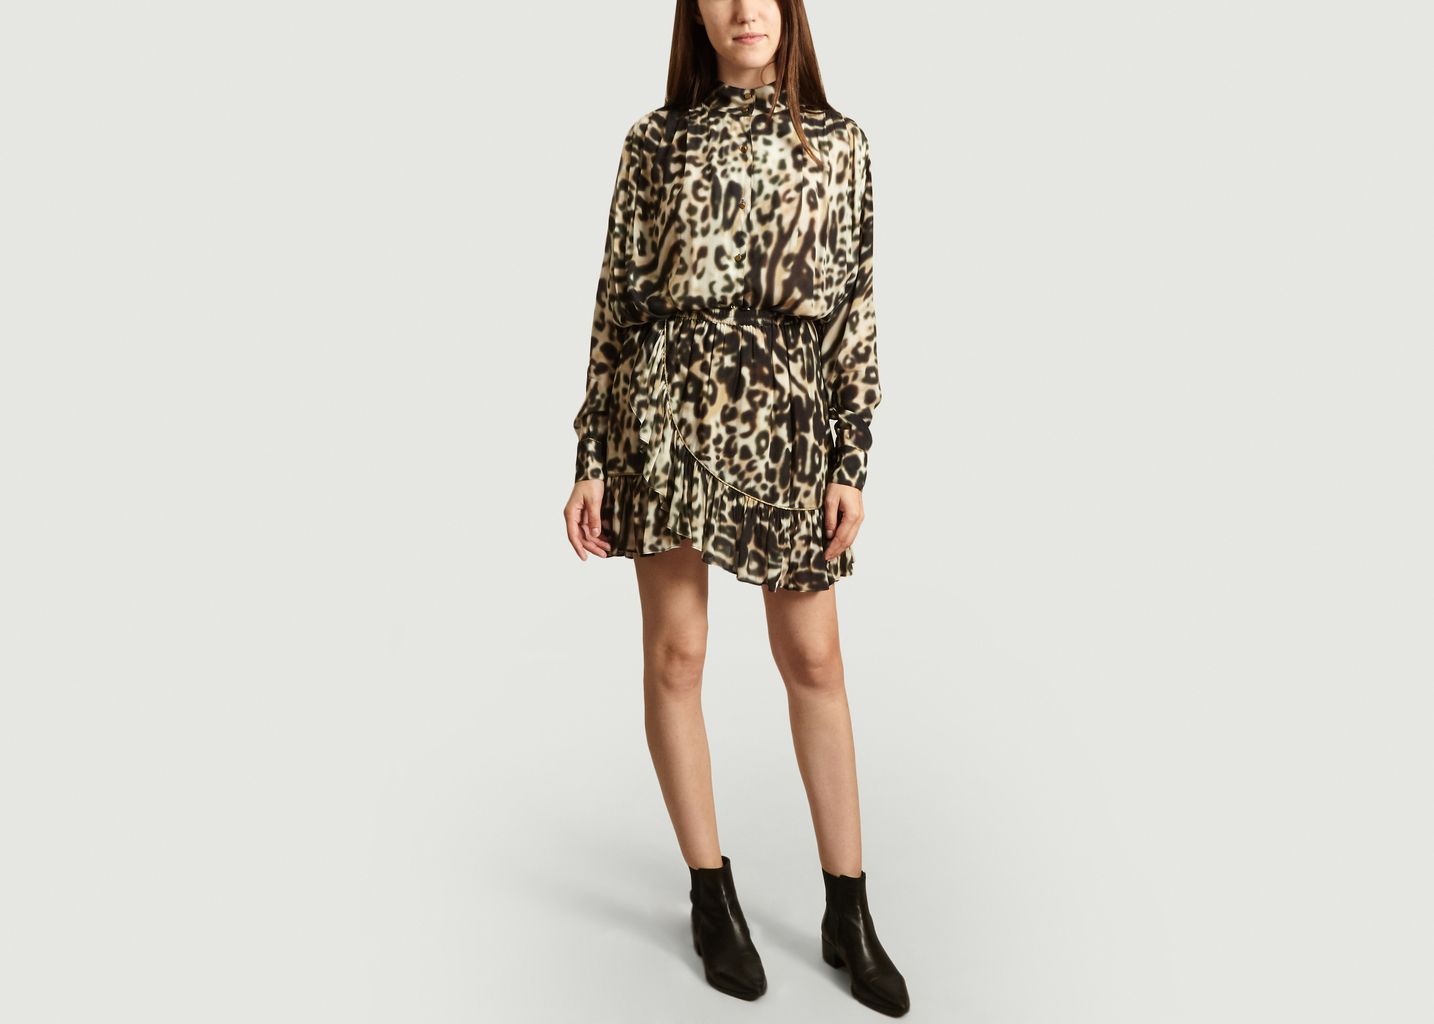 Caetano leopard print shirt - Swildens